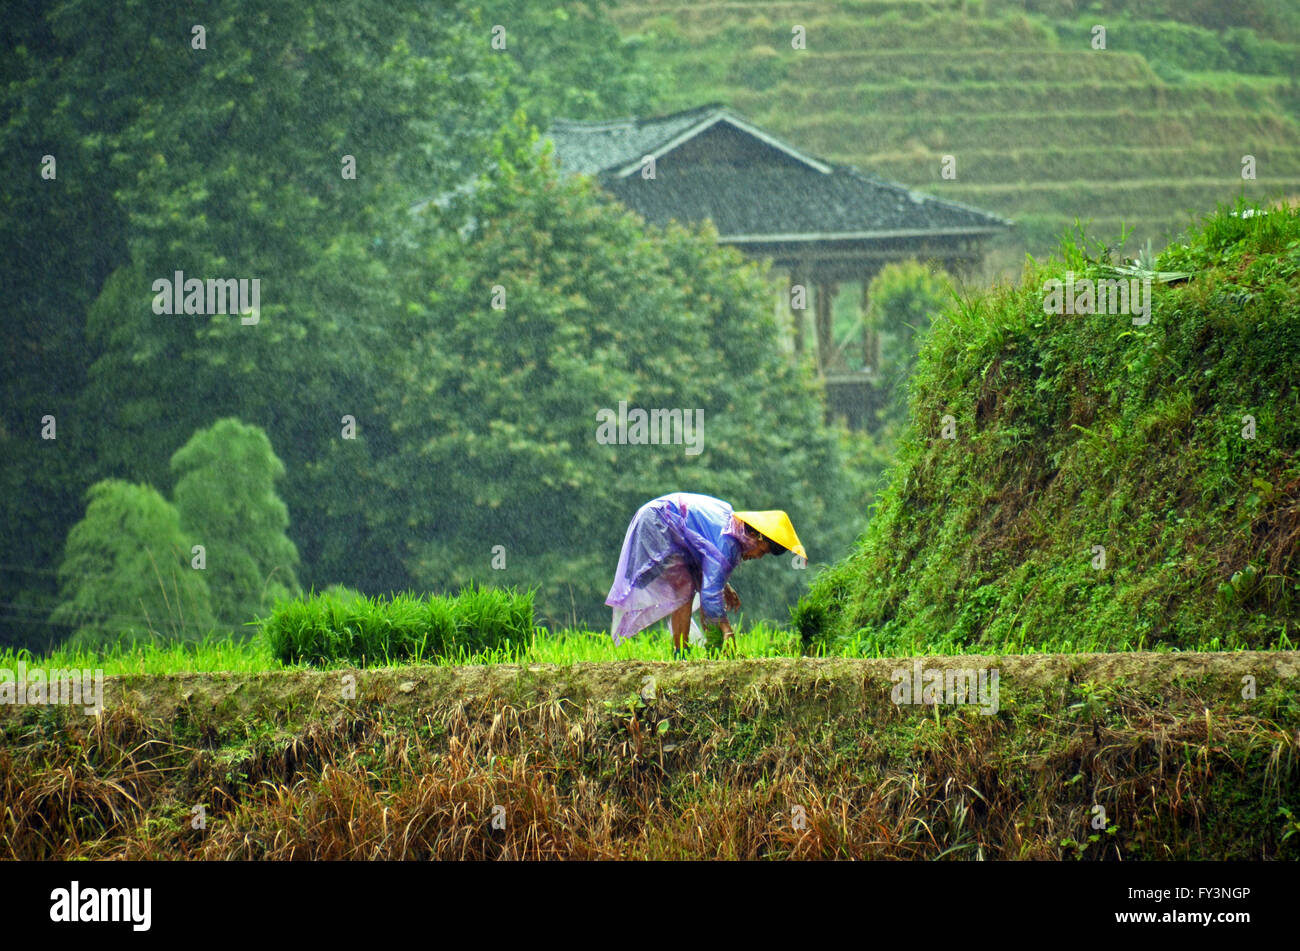 A farmer plants rice seedlings in the Dragon's Backbone rice terraces, Dazhai, China Stock Photo